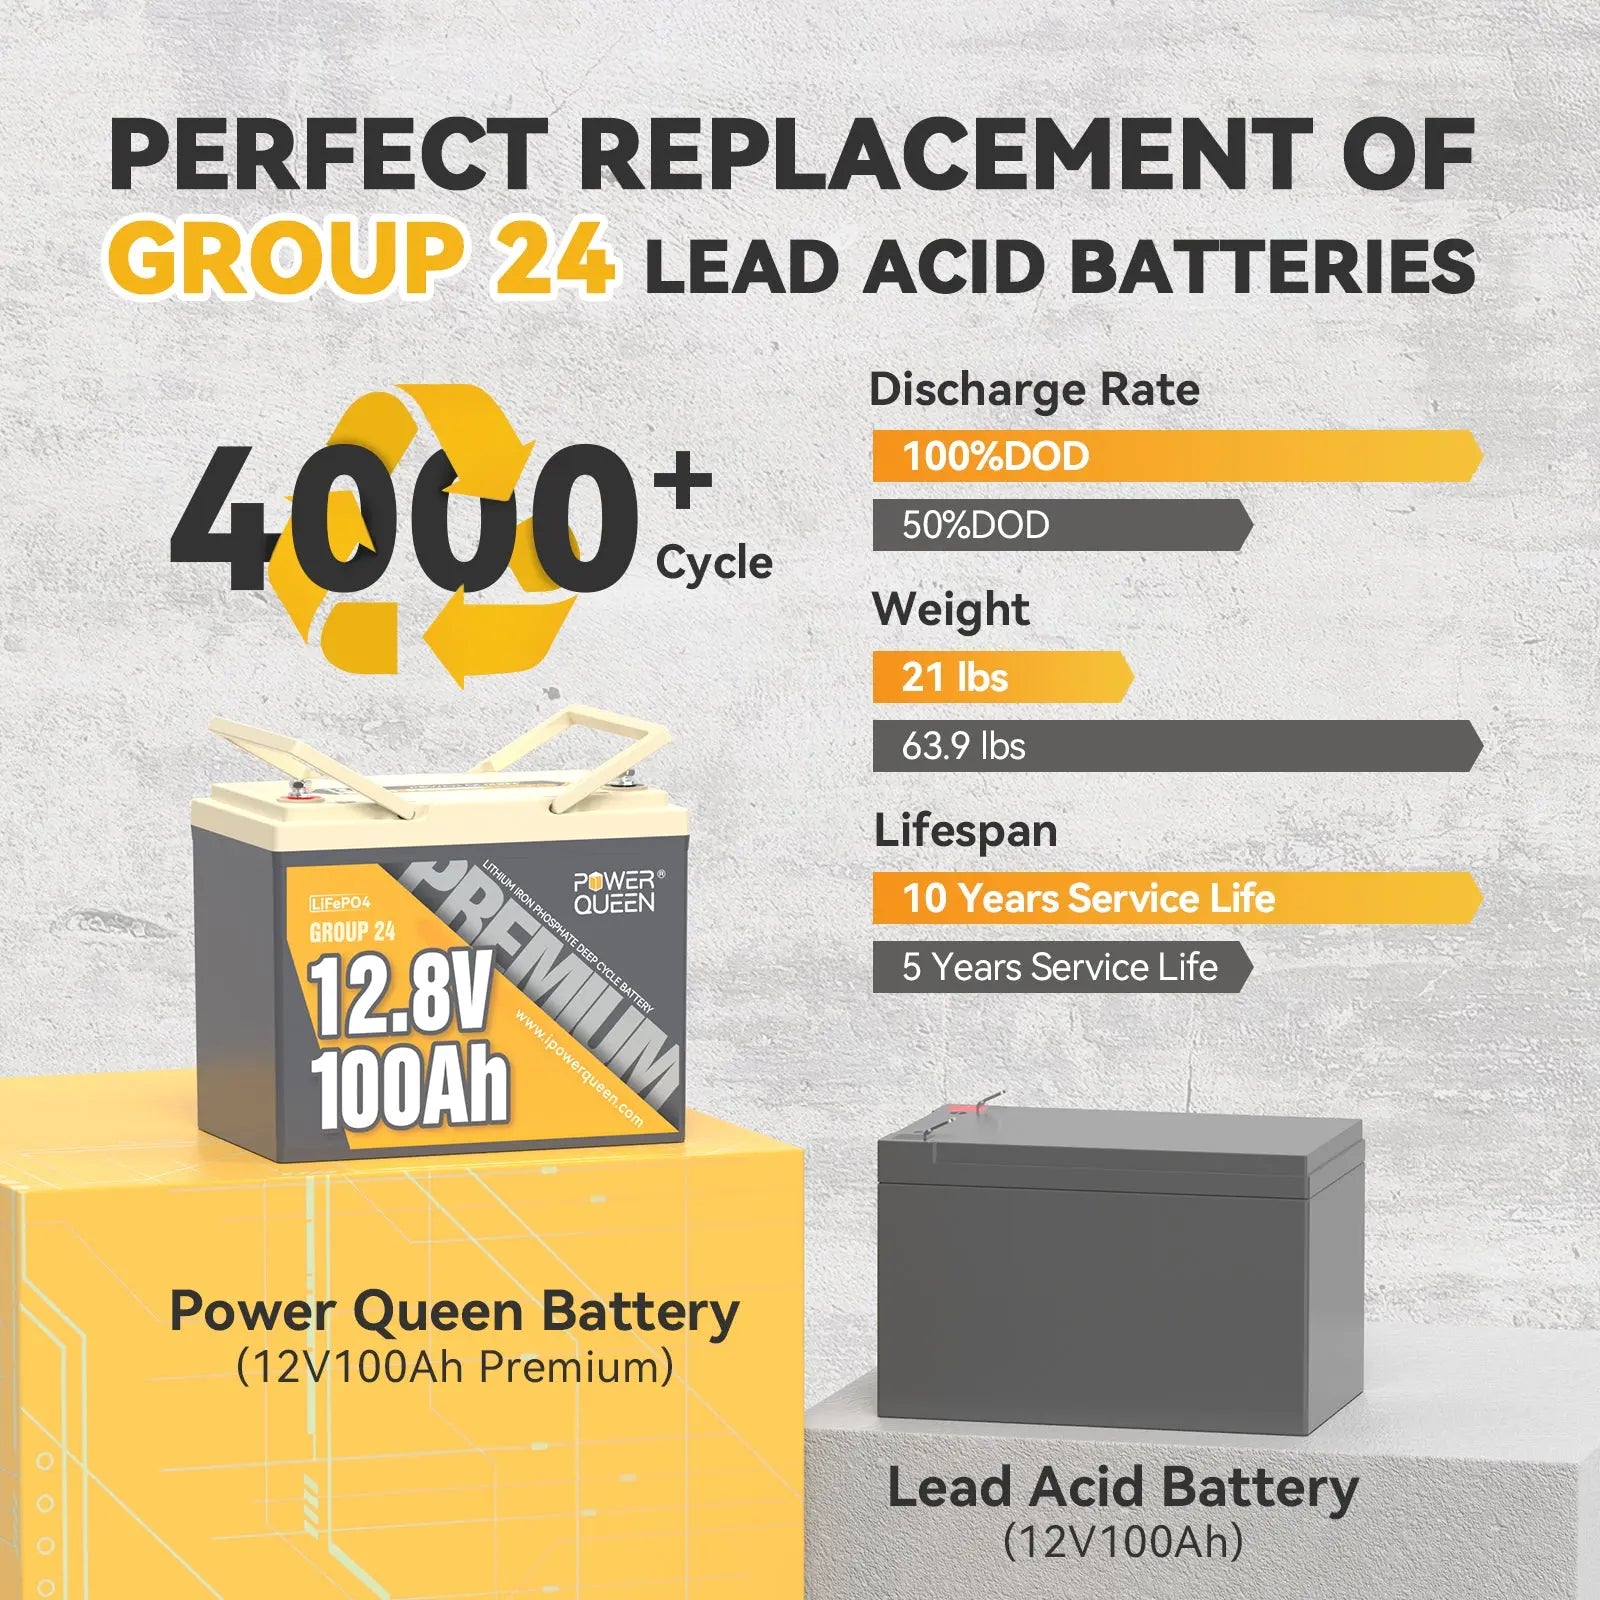 Power Queen 12V 100Ah Lithium Battery vs Lead Acid Battery